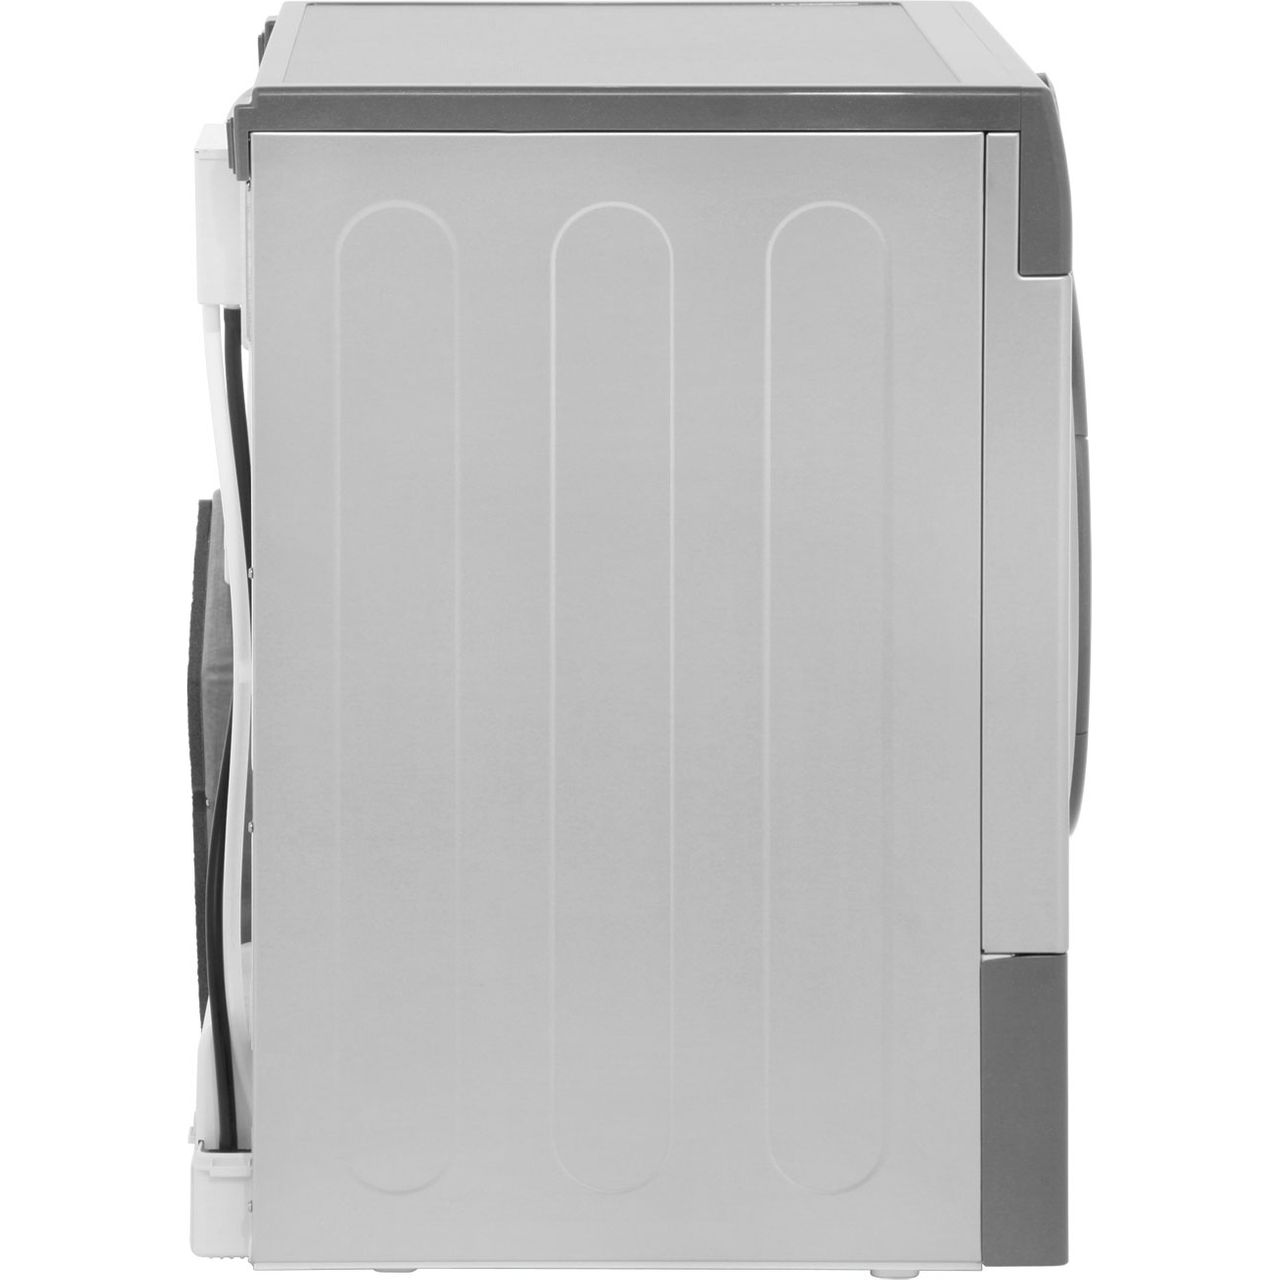 Hotpoint Aquarius TCFS73BGG 7Kg Condenser Tumble Dryer Review